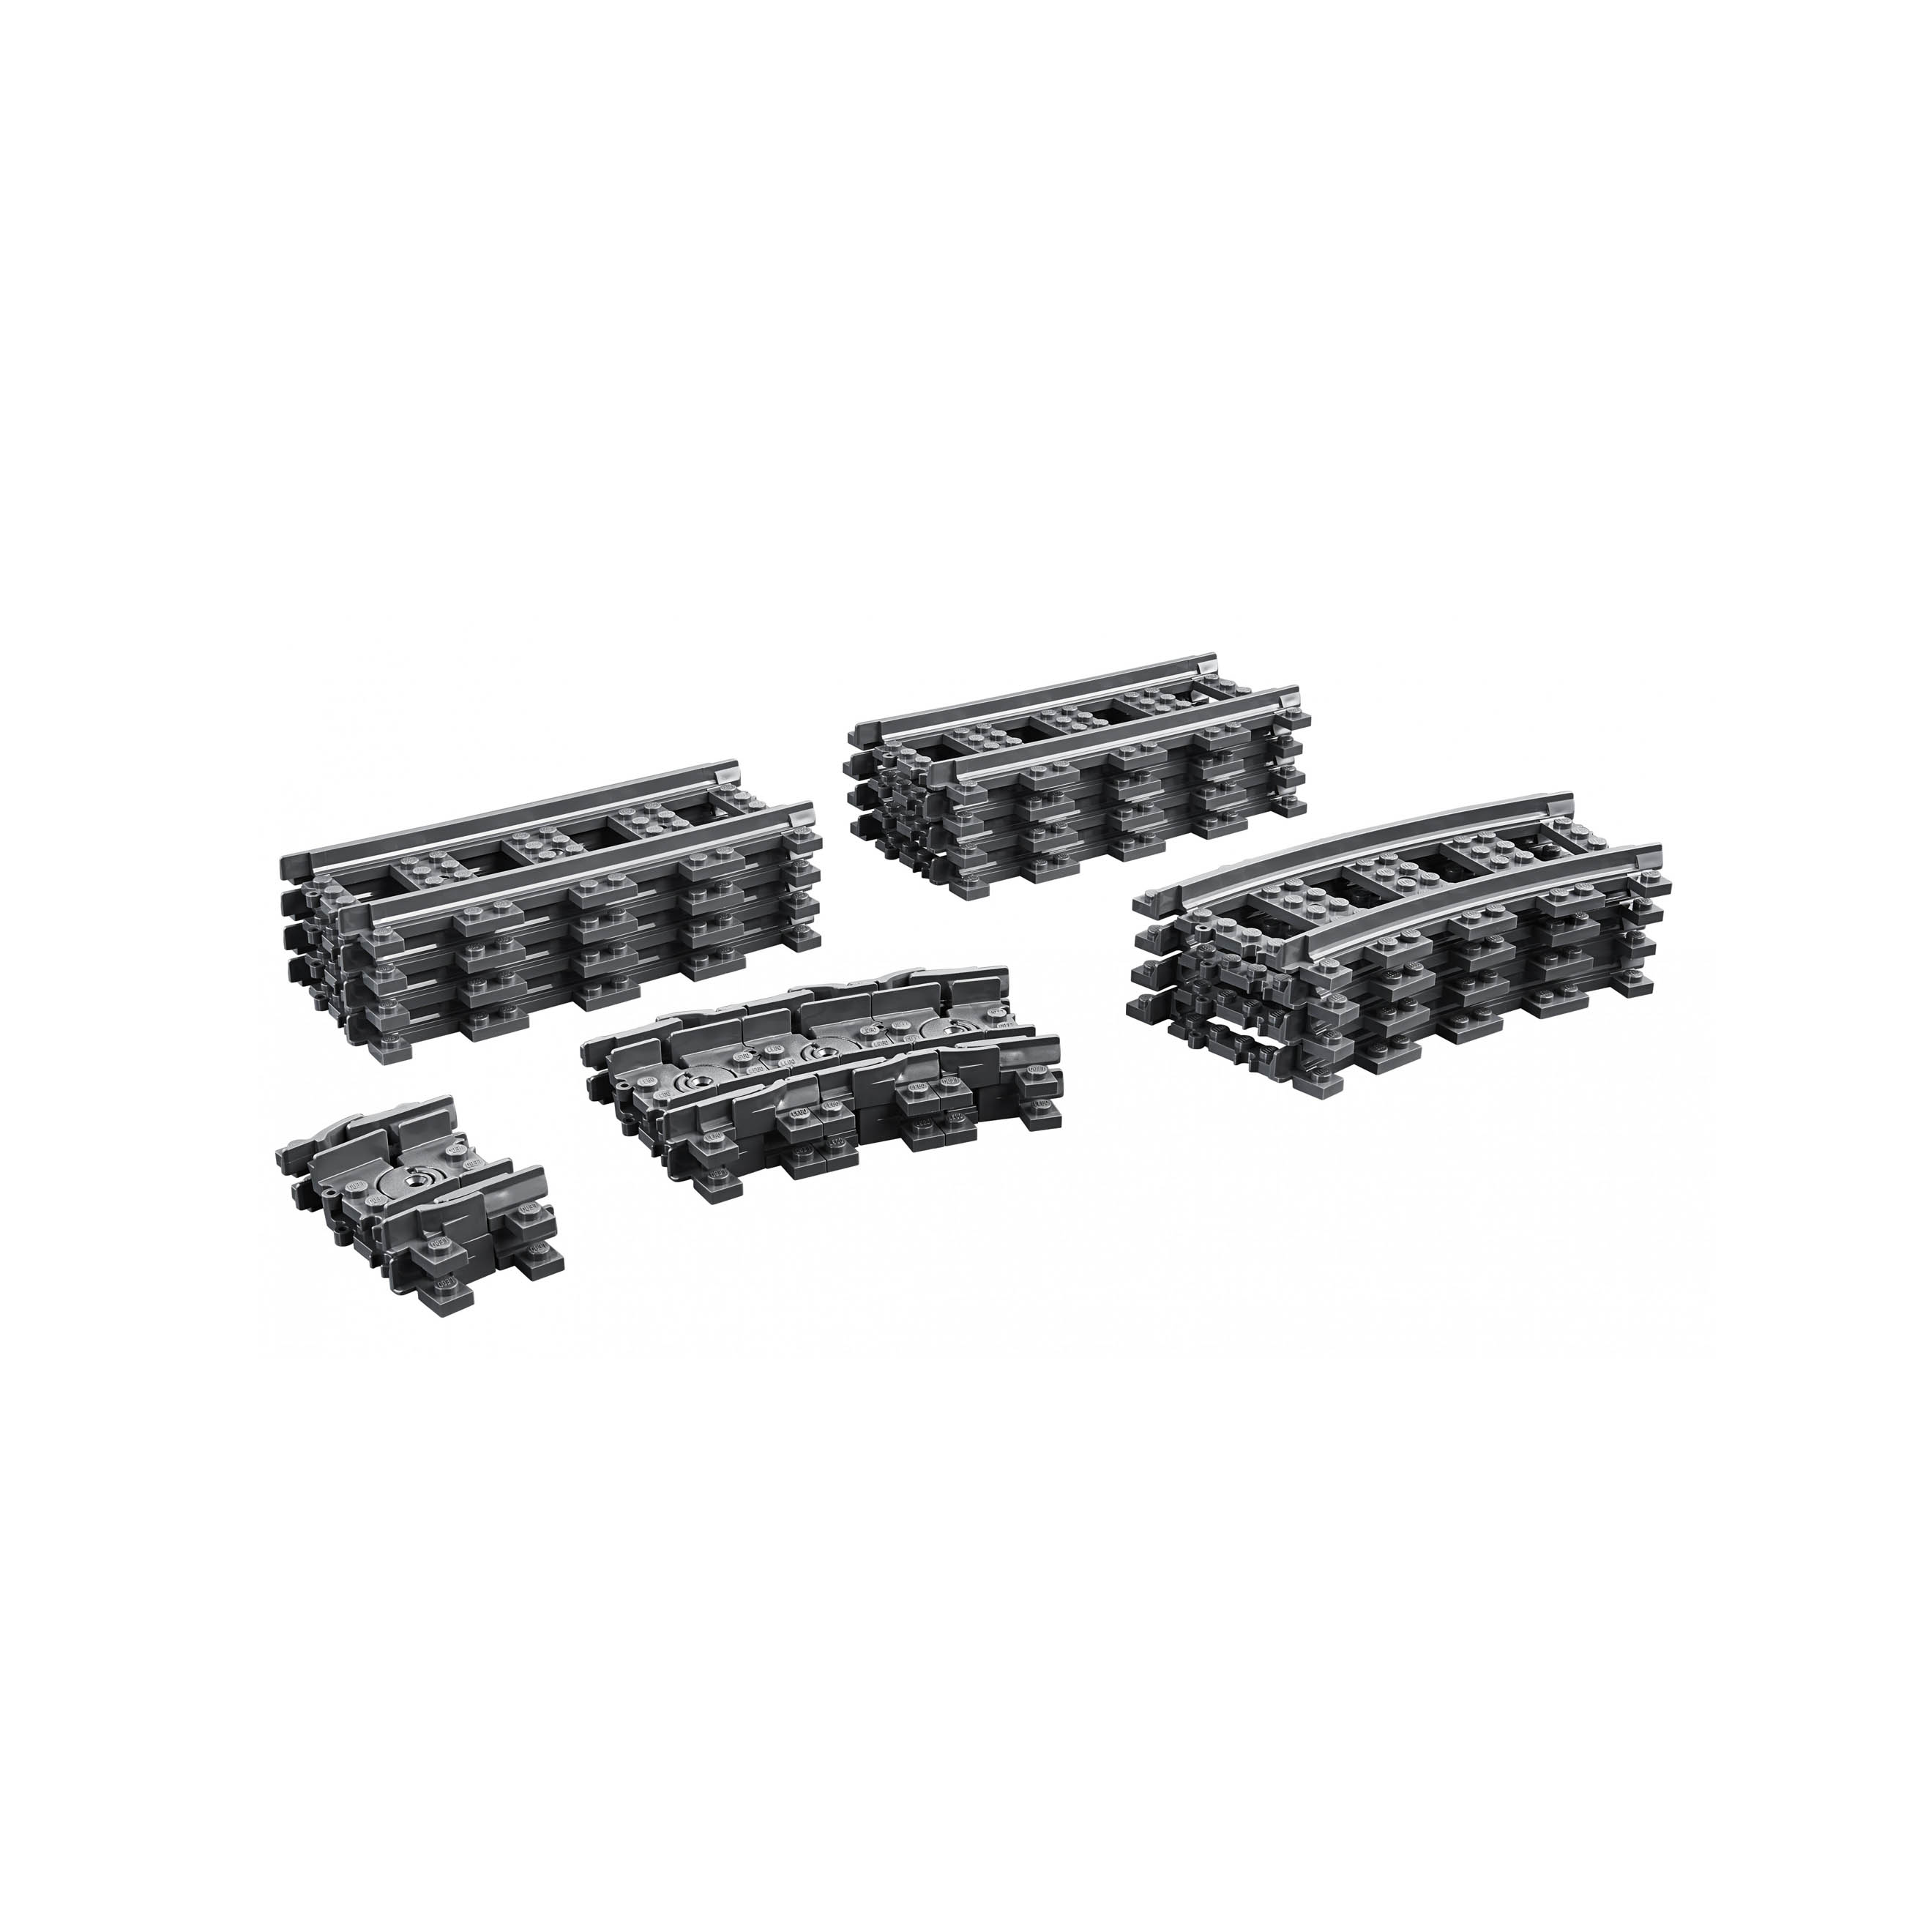 LEGO City Trains Binari, 20 Pezzi Set Accessori di Espansione, 60205 60205, , large